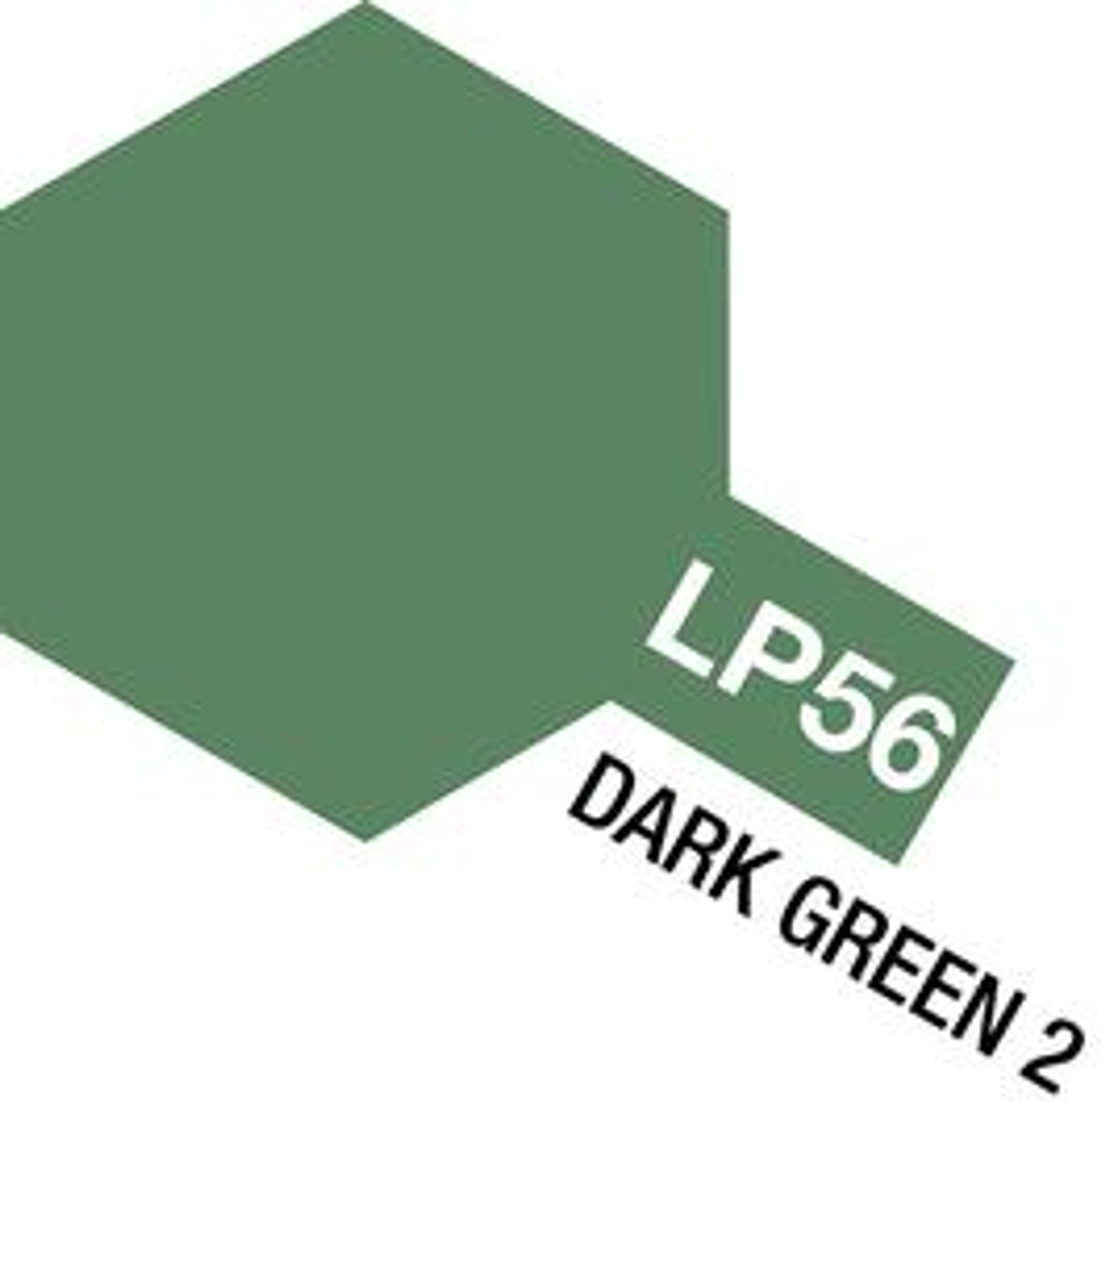 Tamiya 82156 Lacquer Paint LP-56 Dark Green 2 model paint 10 ML bottle at MRS Hobby Shop Sandy, Utah 84070